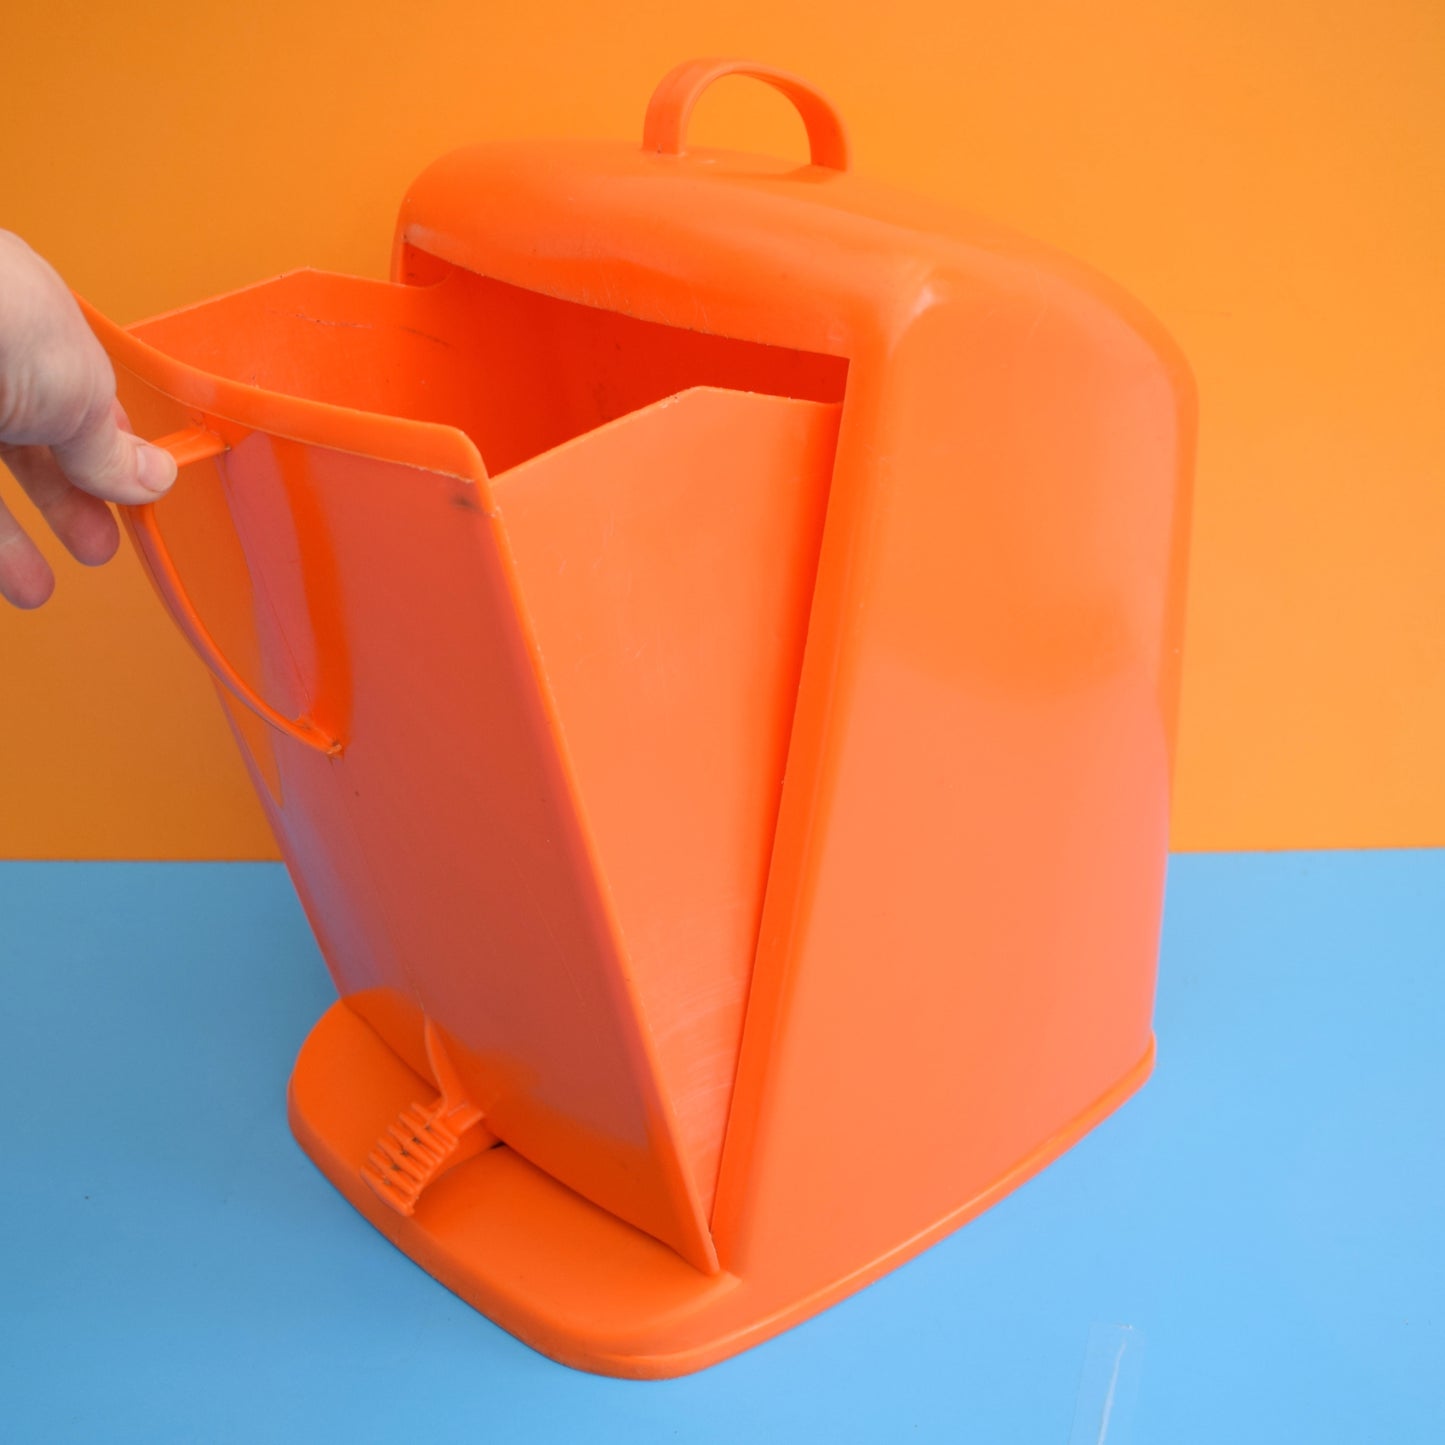 Vintage 1970s Plastic Small Kitchen Bin - Orange